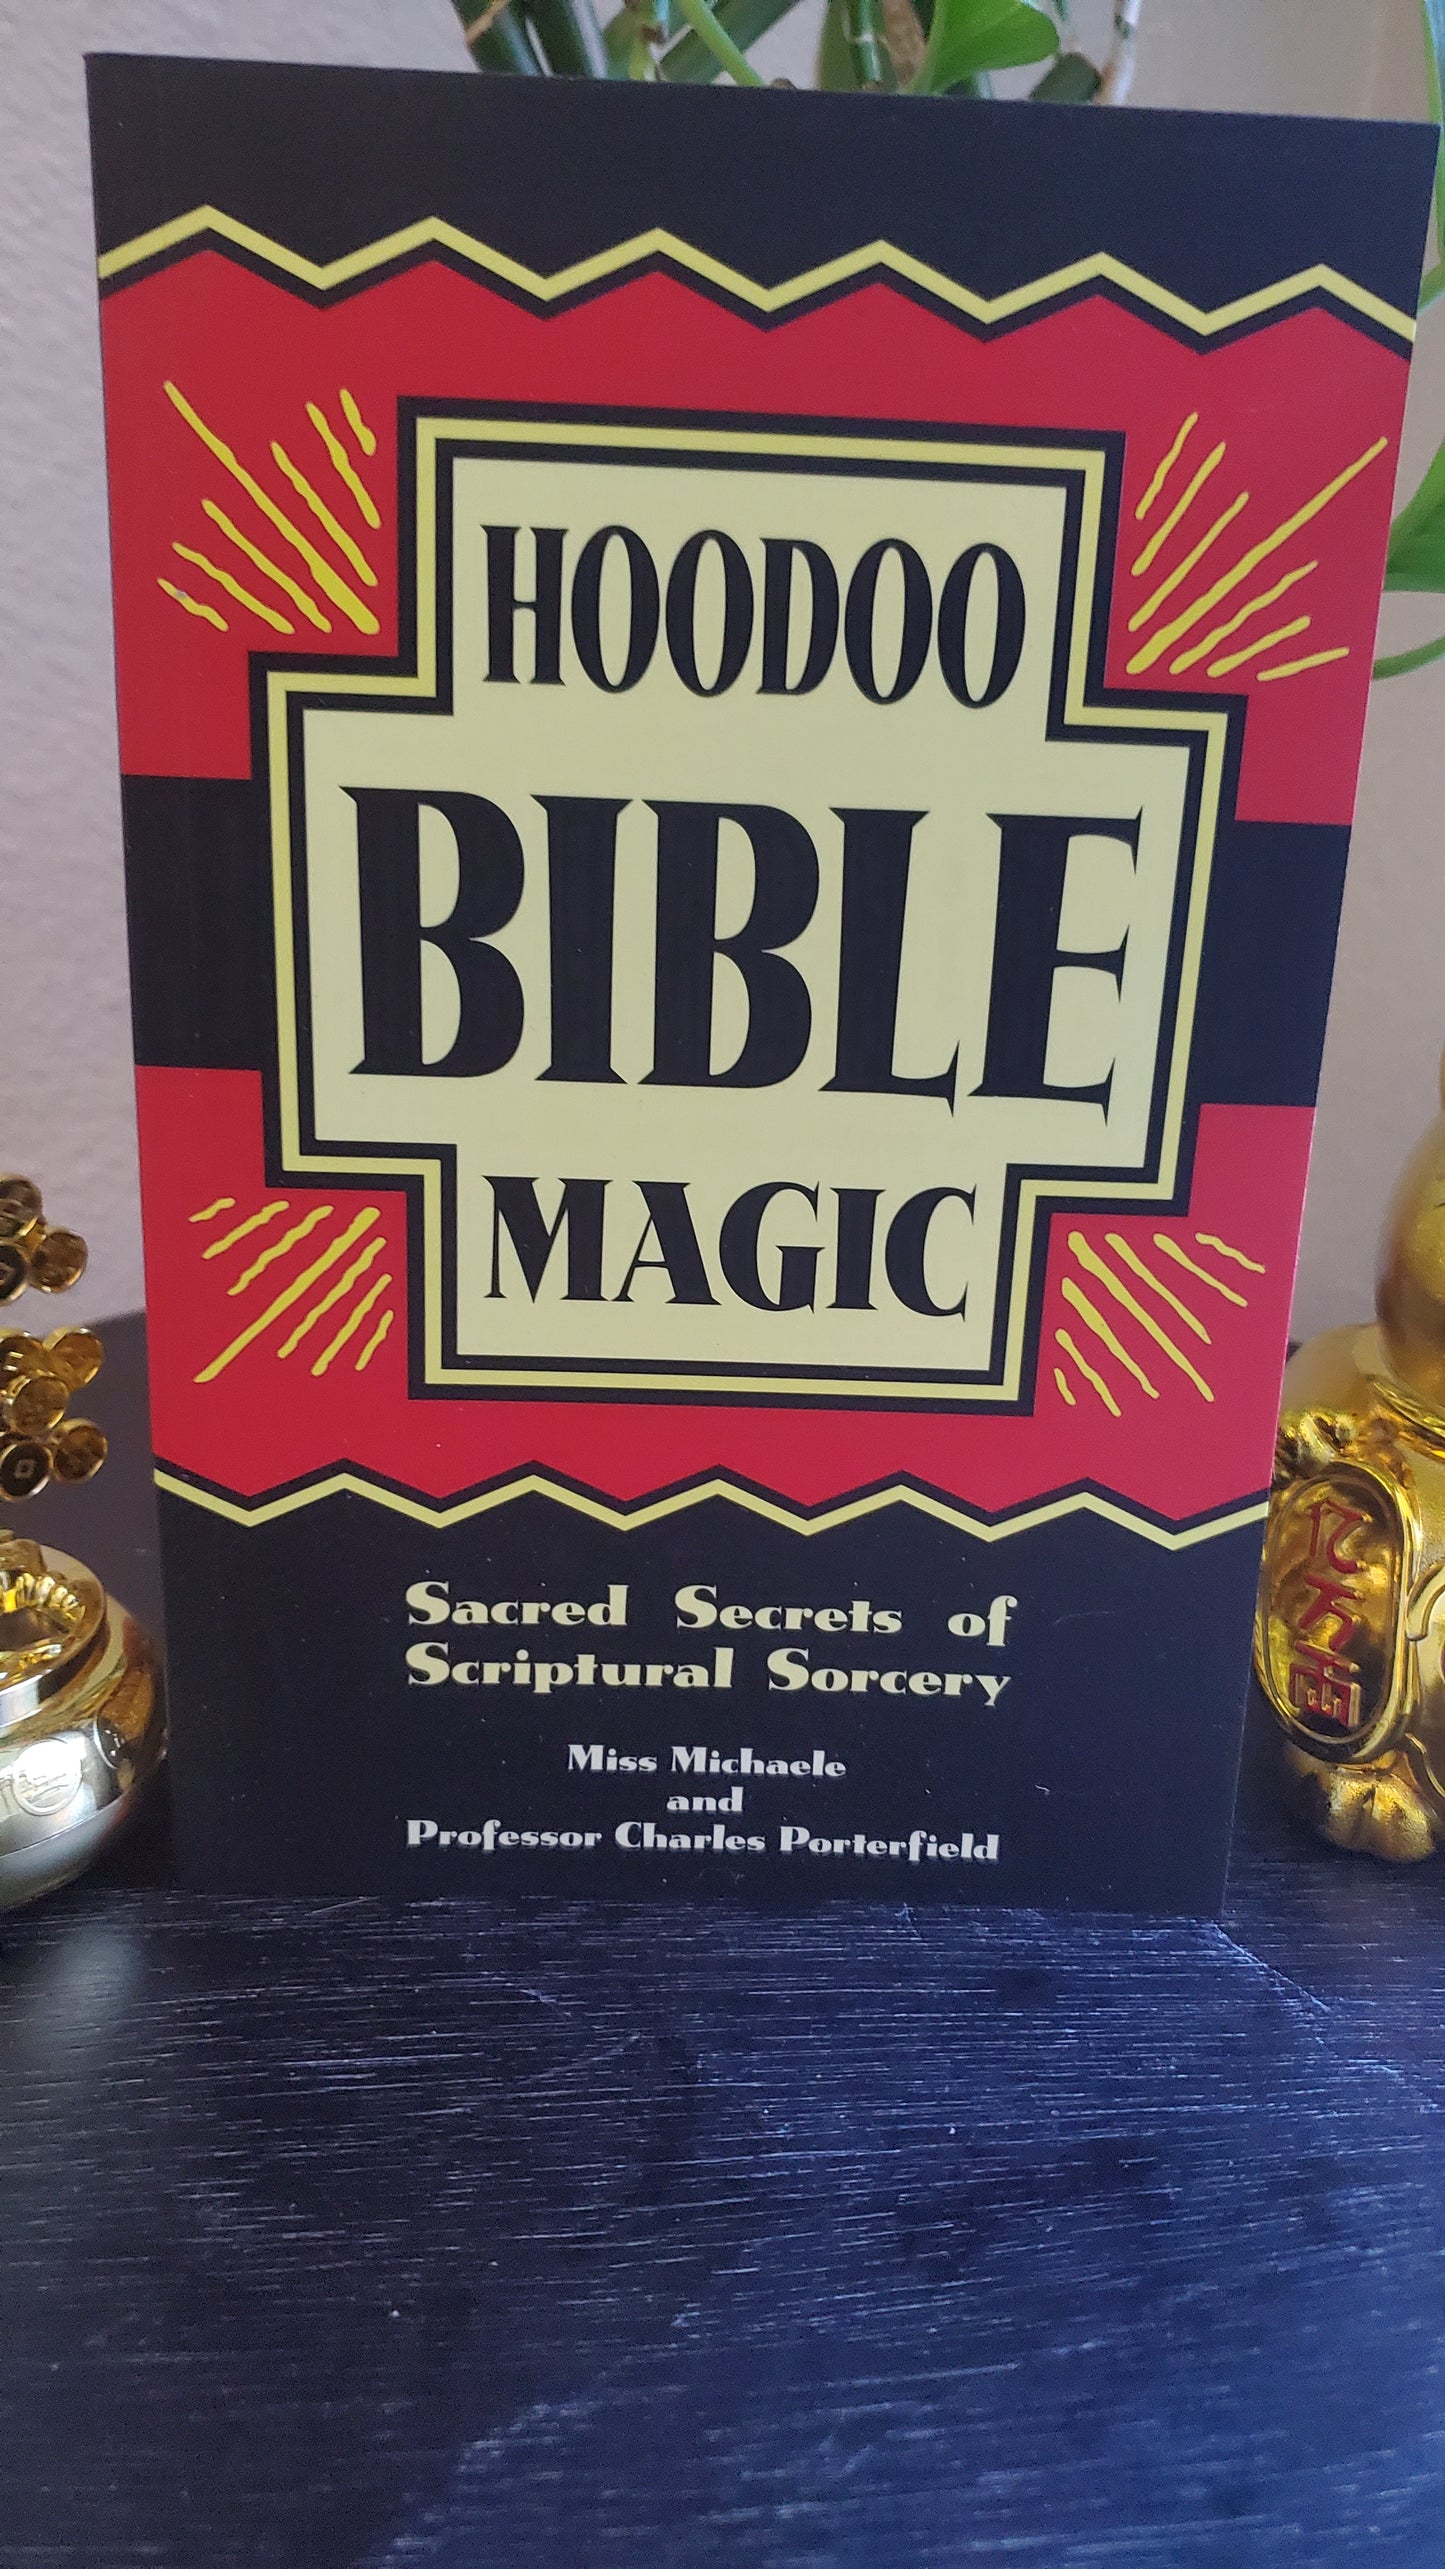 Hoodoo Bible Magic By Miss Michaele, Professor Charles Porterfield, Catherine Yronwode **POWERFUL BUY** Great Read!!! #Hoodoo #BibleMagic